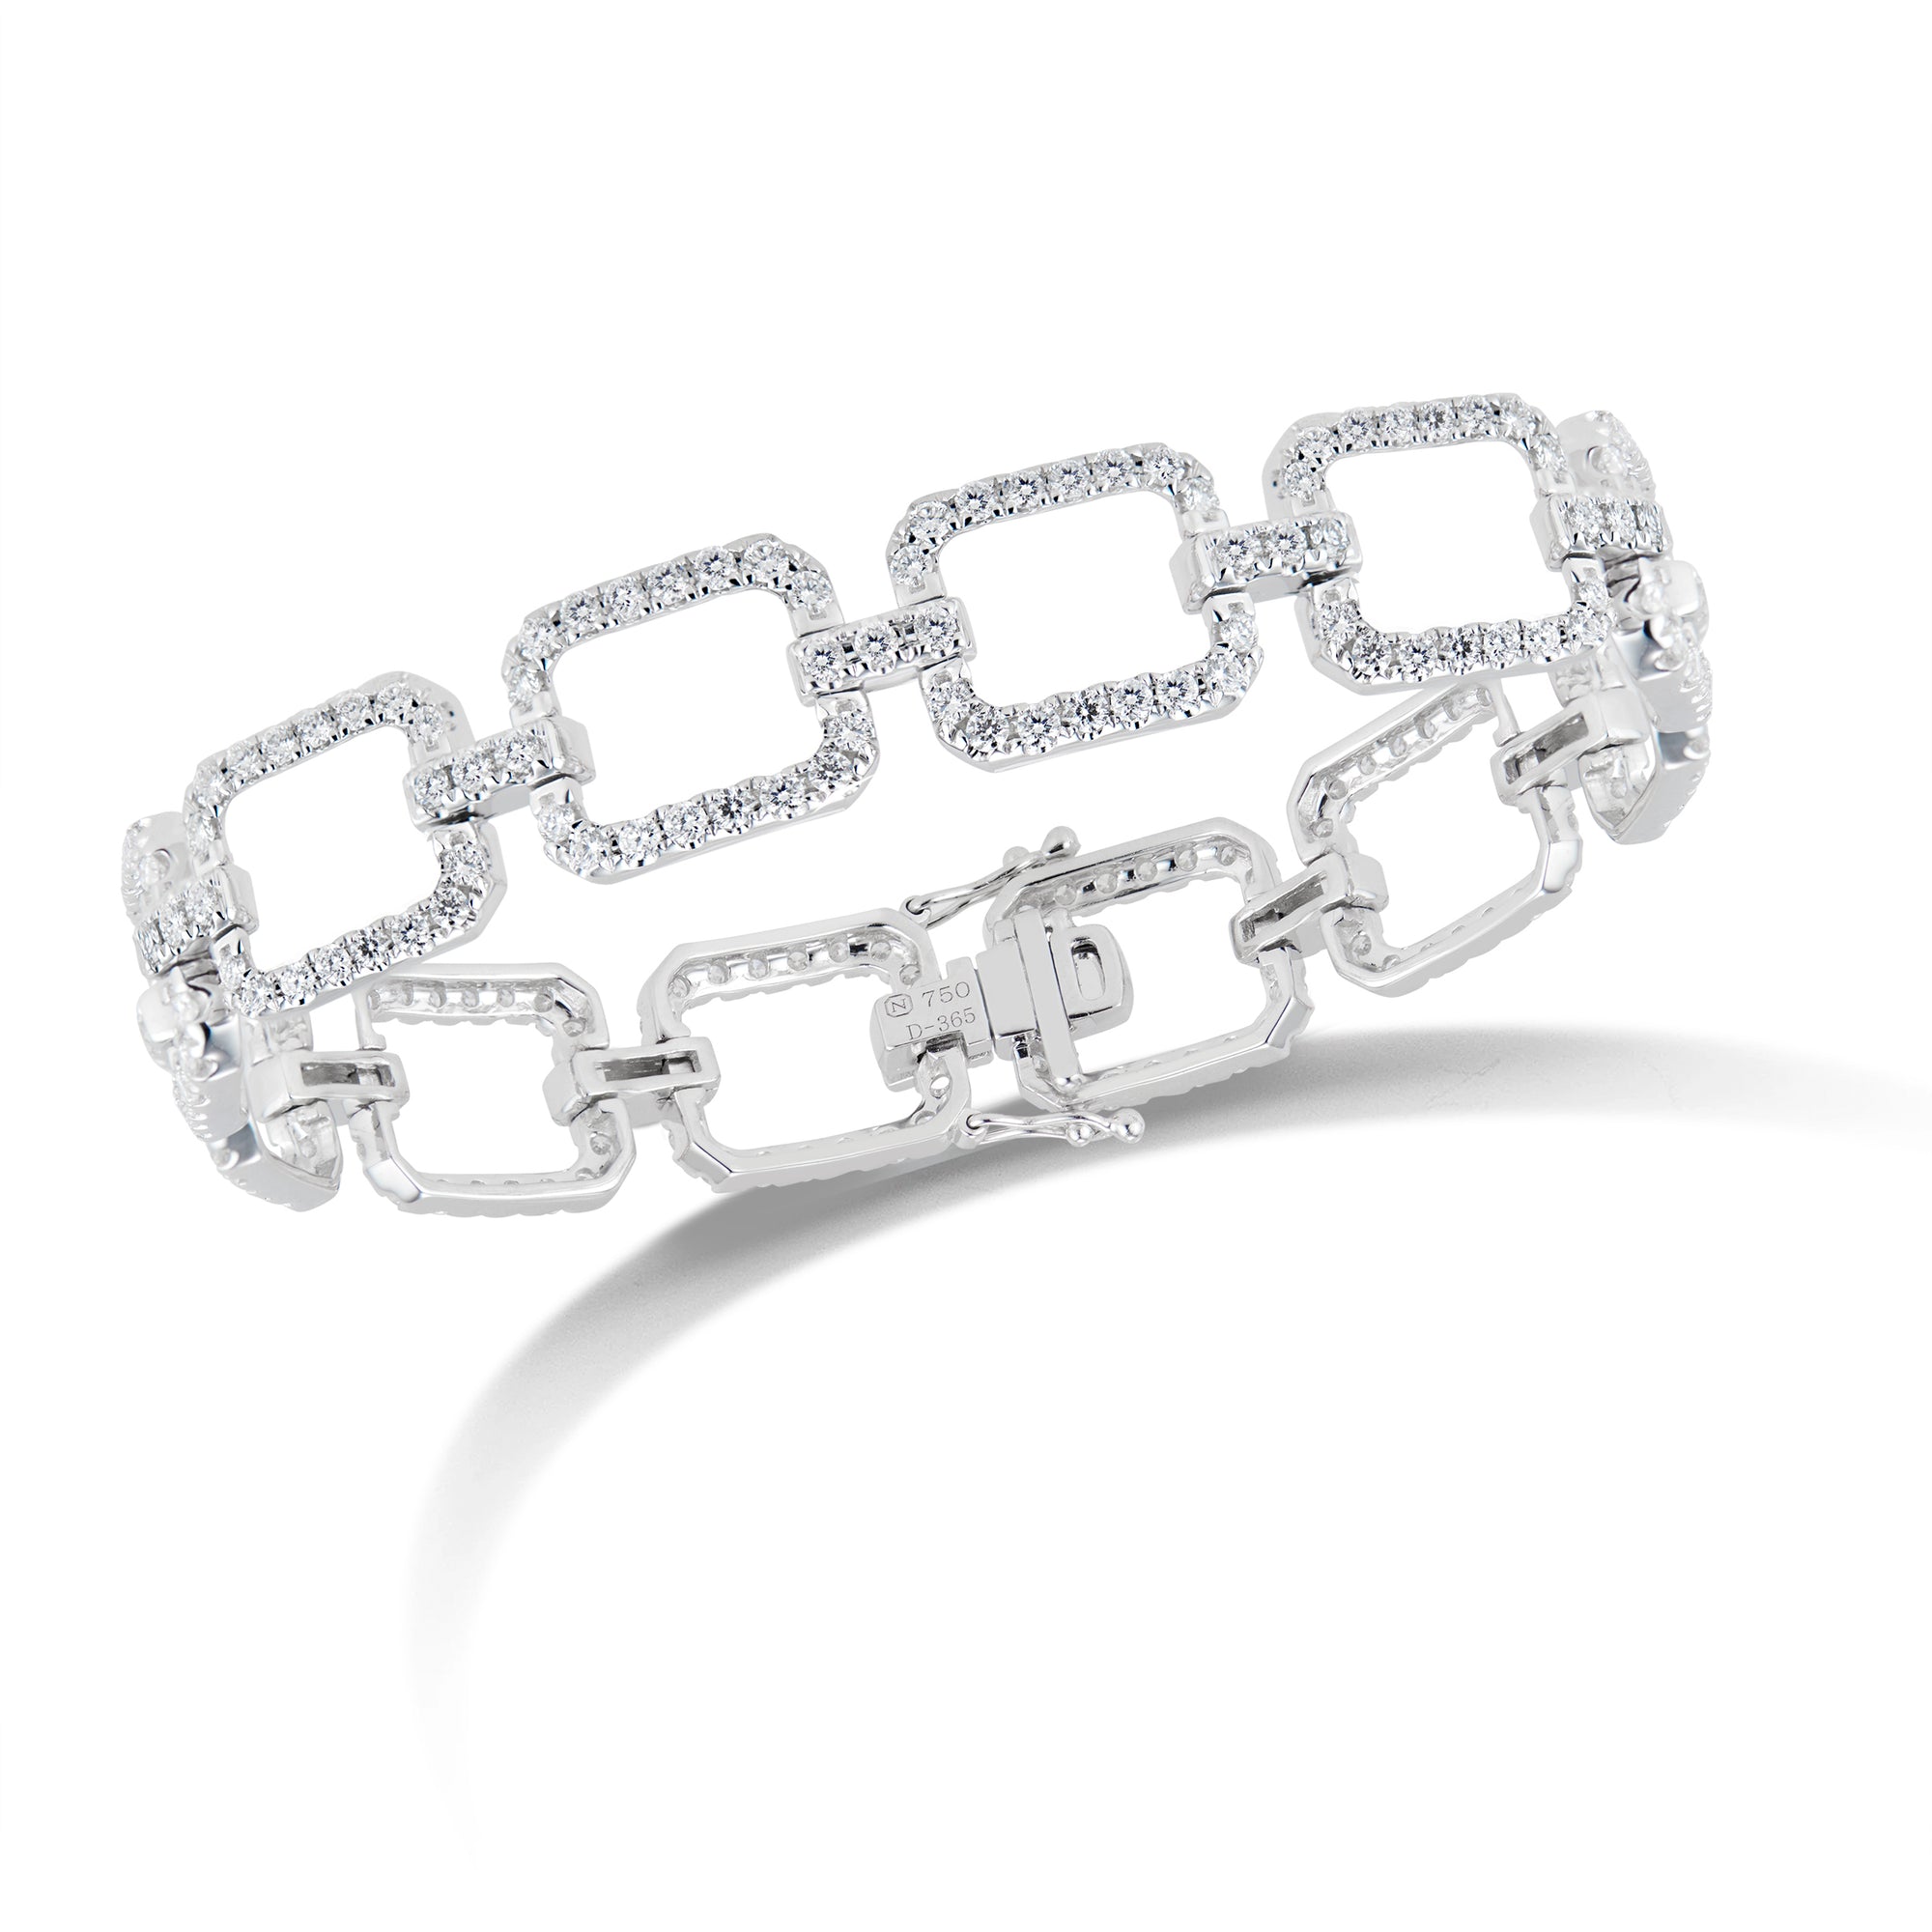 Diamond Rectangle Link Bracelet  - 18K gold weighing 19.76 grams  - 228 round diamonds totaling 3.65 carats